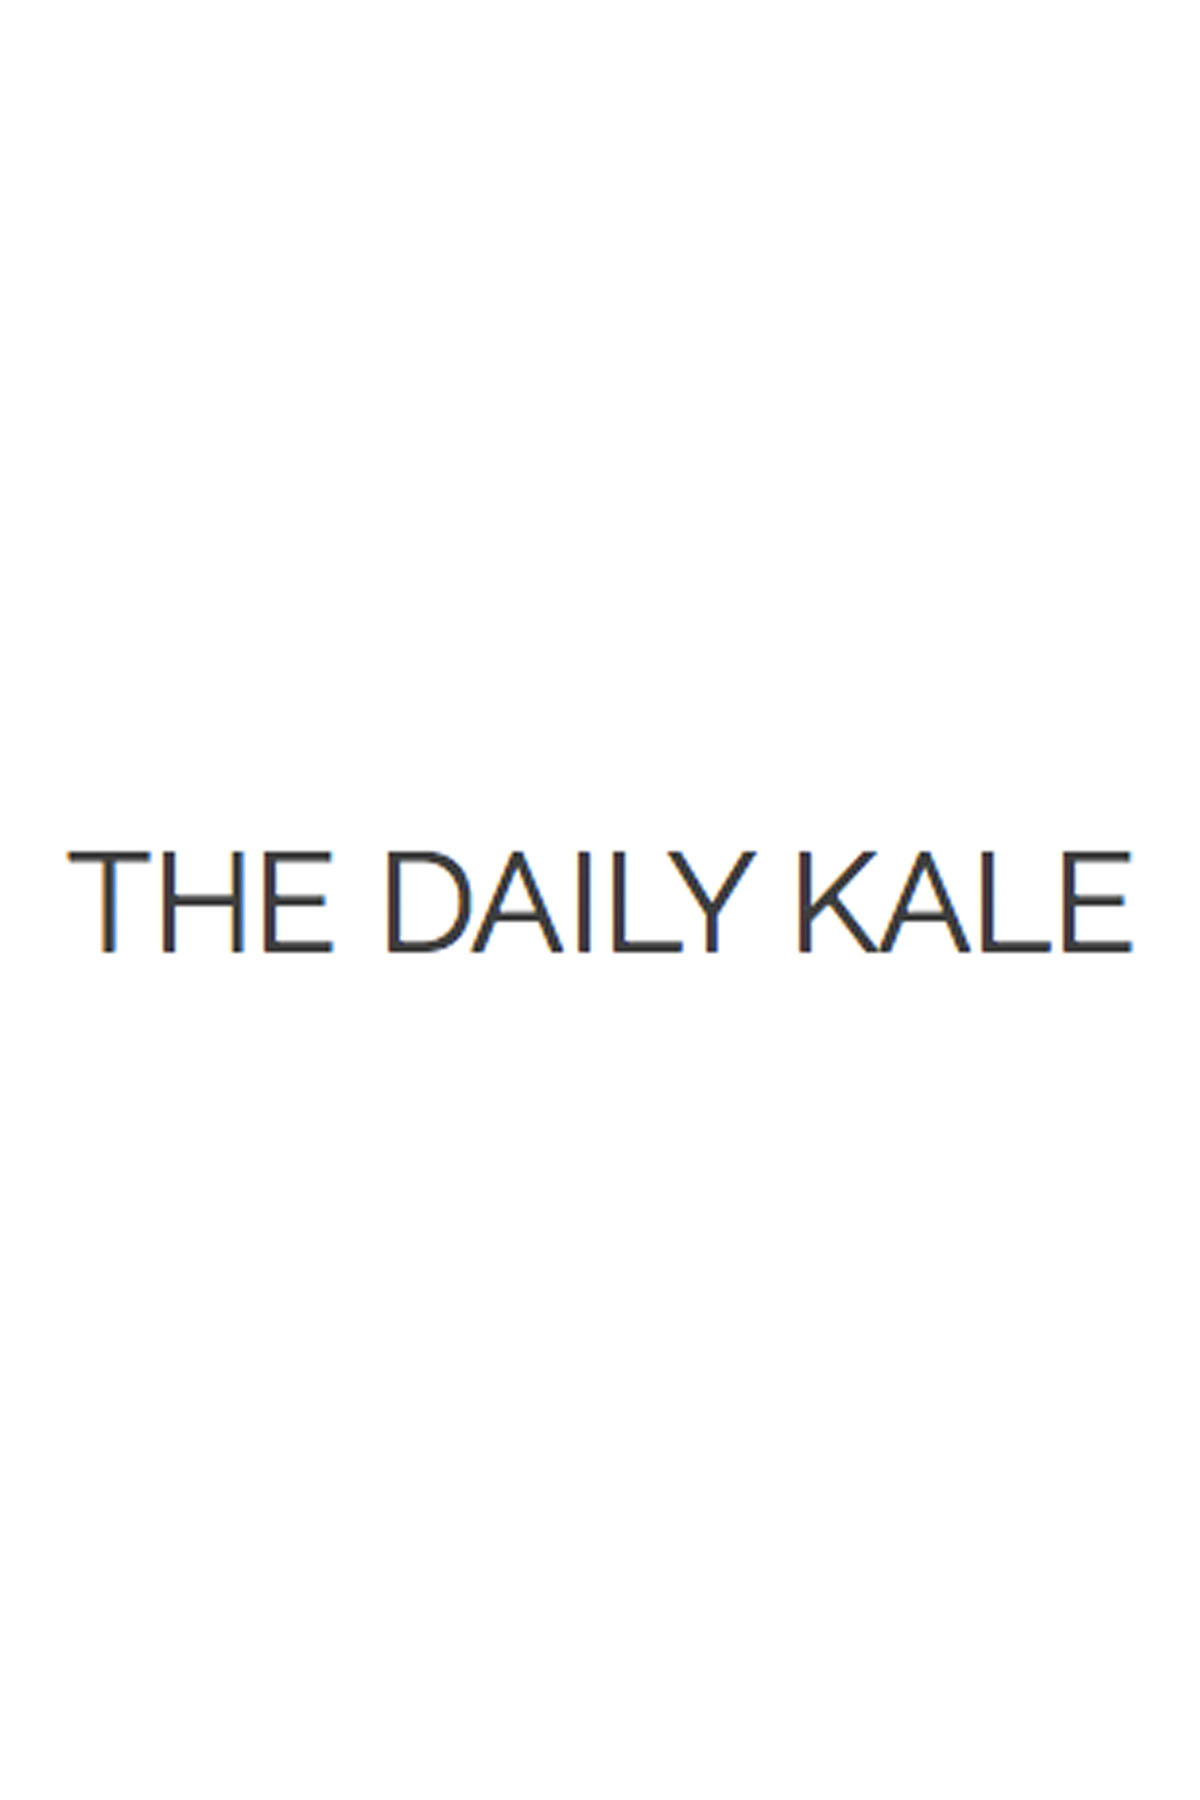 daily_kale.jpg